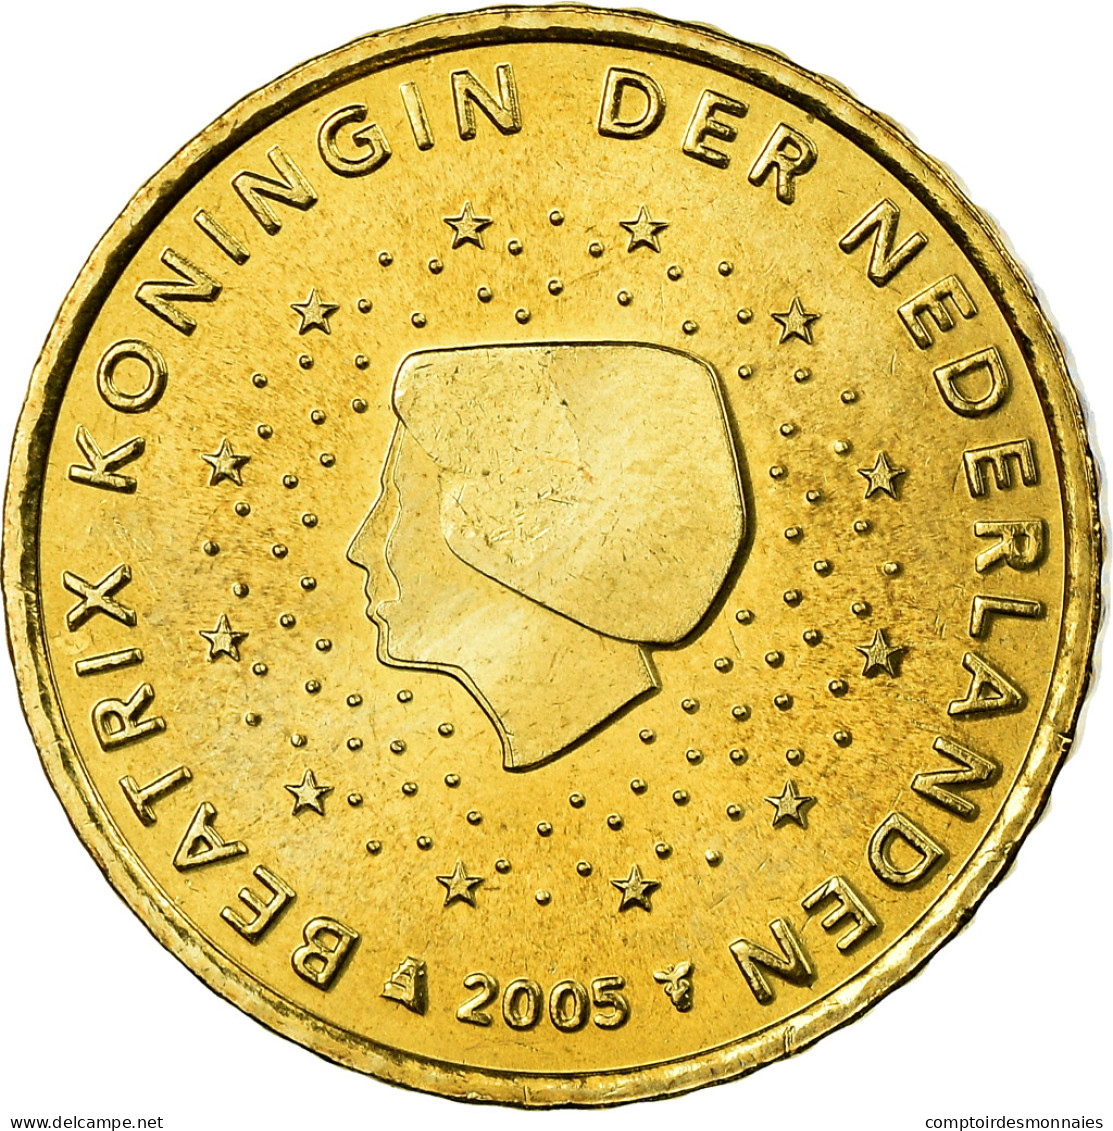 Pays-Bas, 50 Euro Cent, 2005, SPL, Laiton, KM:239 - Nederland